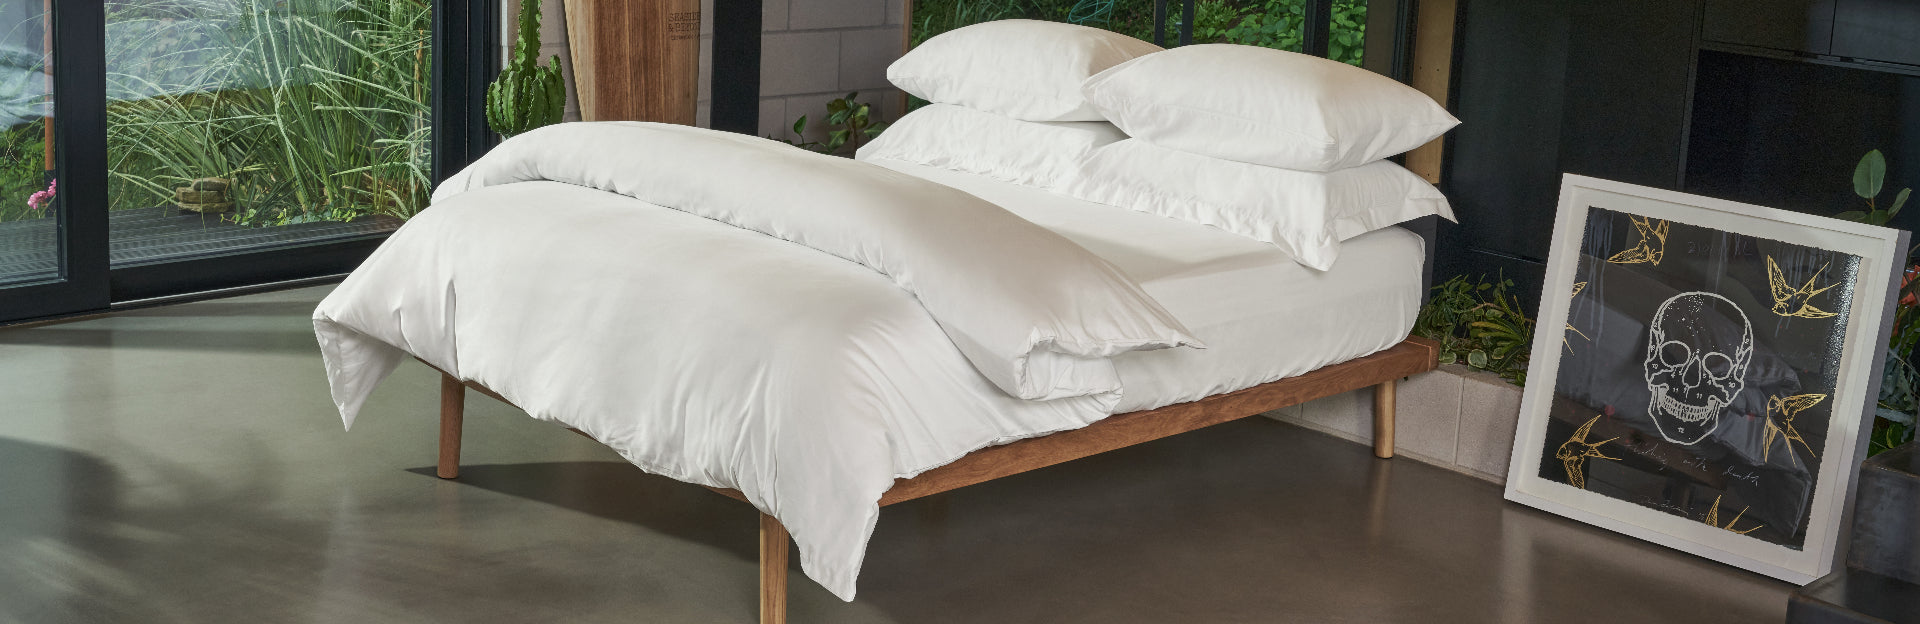 euro double bedding | long double bedding | Ikea double